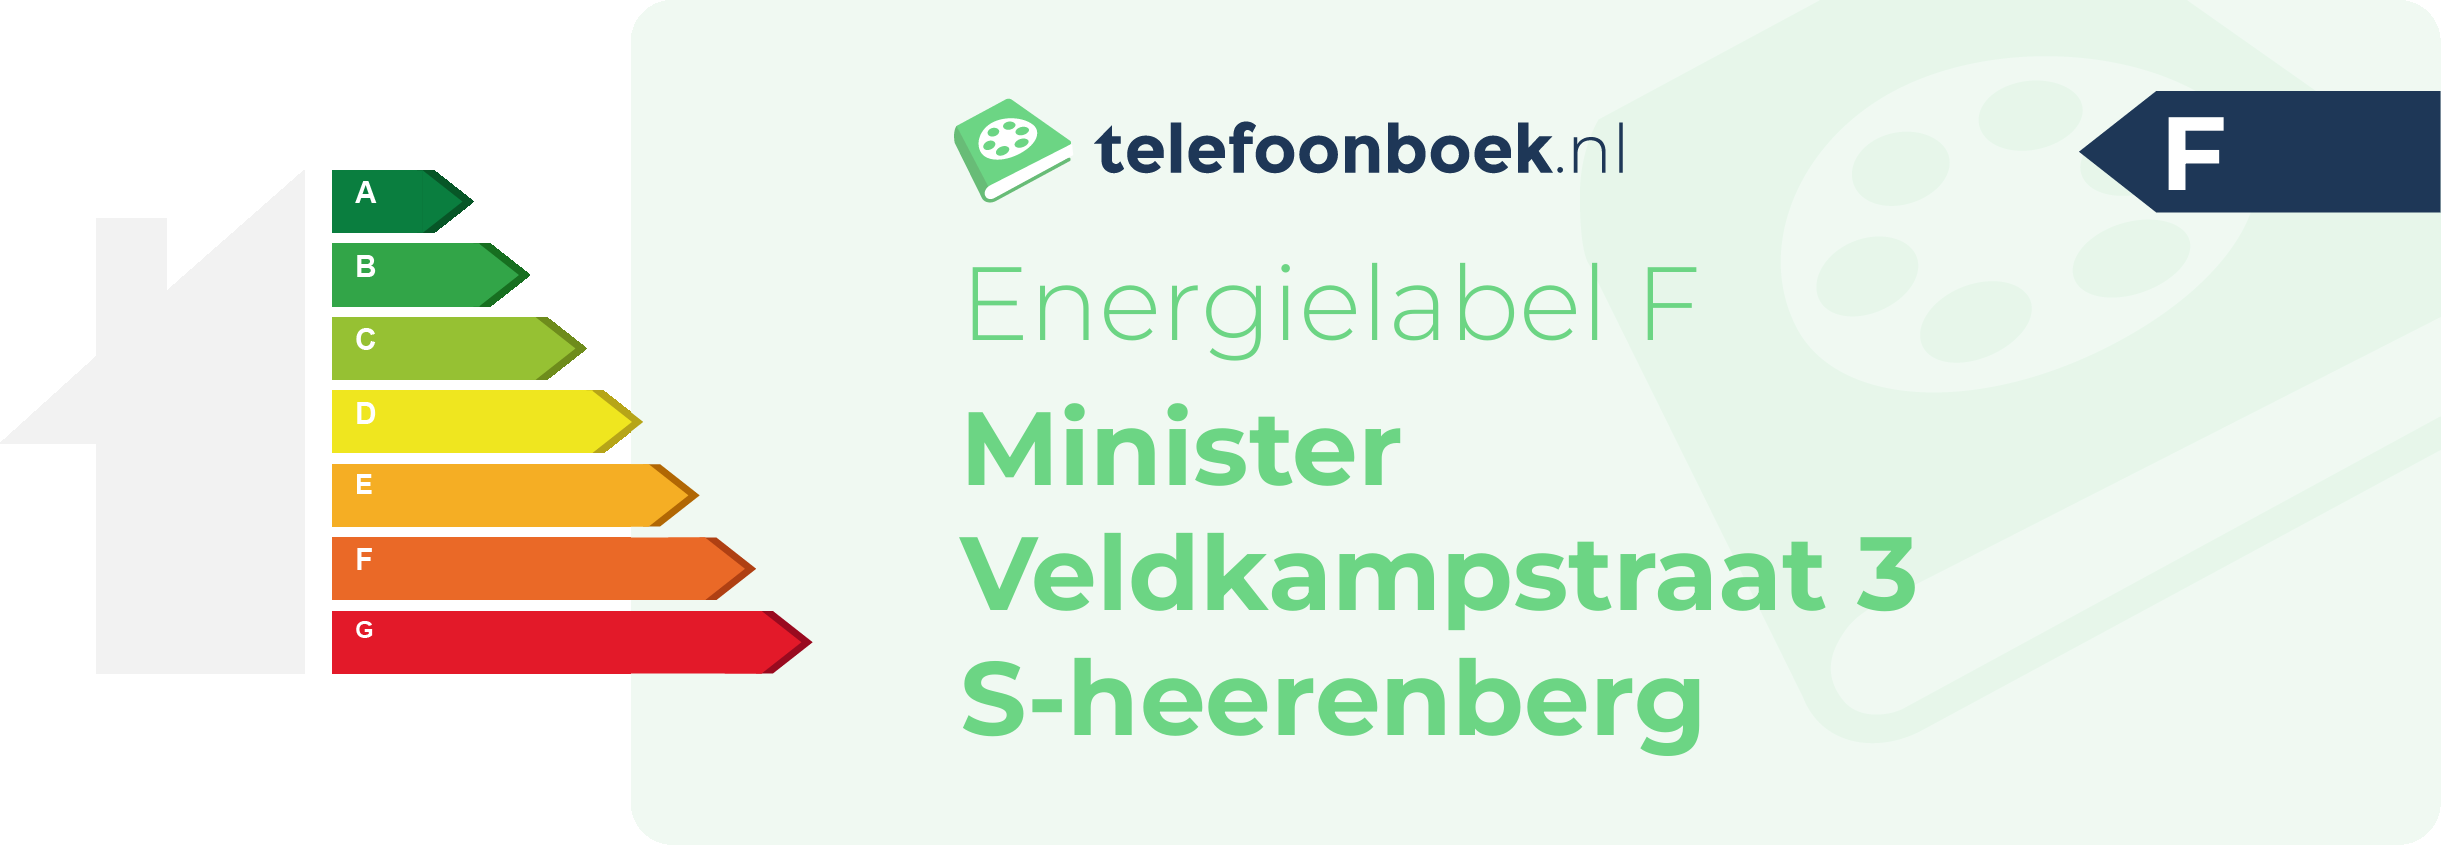 Energielabel Minister Veldkampstraat 3 S-Heerenberg